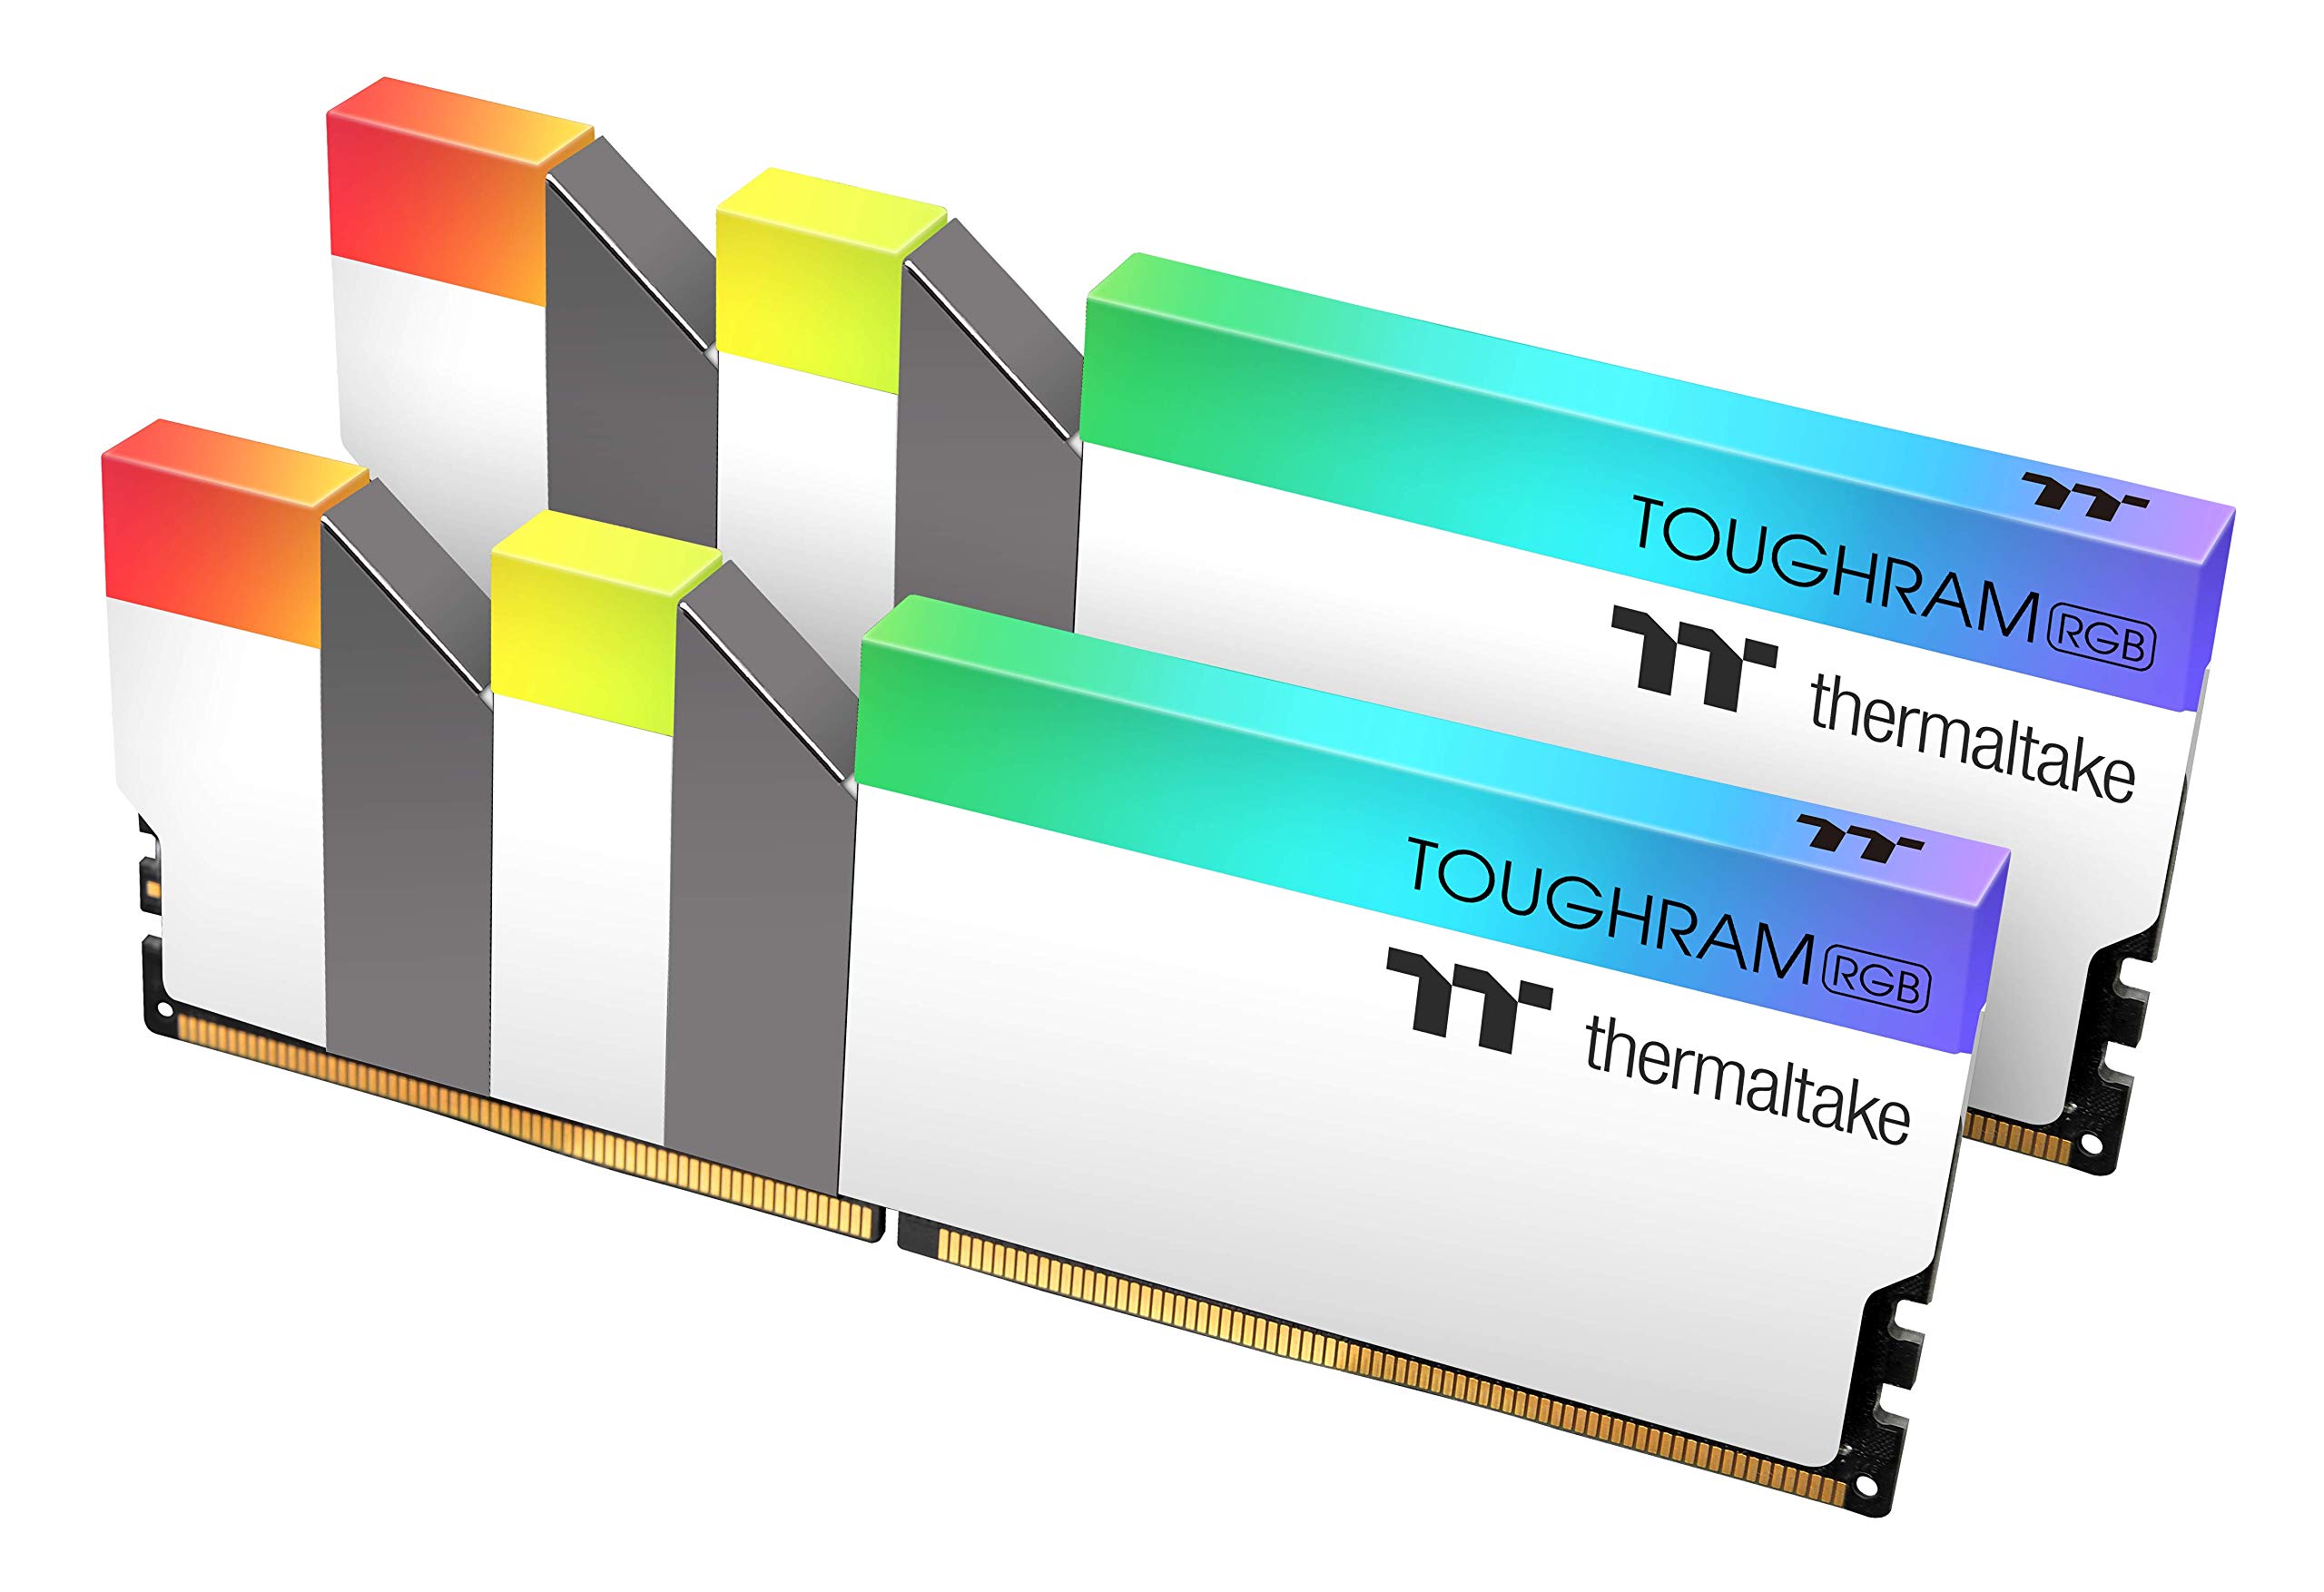 Thermaltake TOUGHRAM RGB ホワイト DDR4 4400MHz 16GB 8GB x 2 1680万色 RGB AlexaRazer Chroma5V マザーボード 同